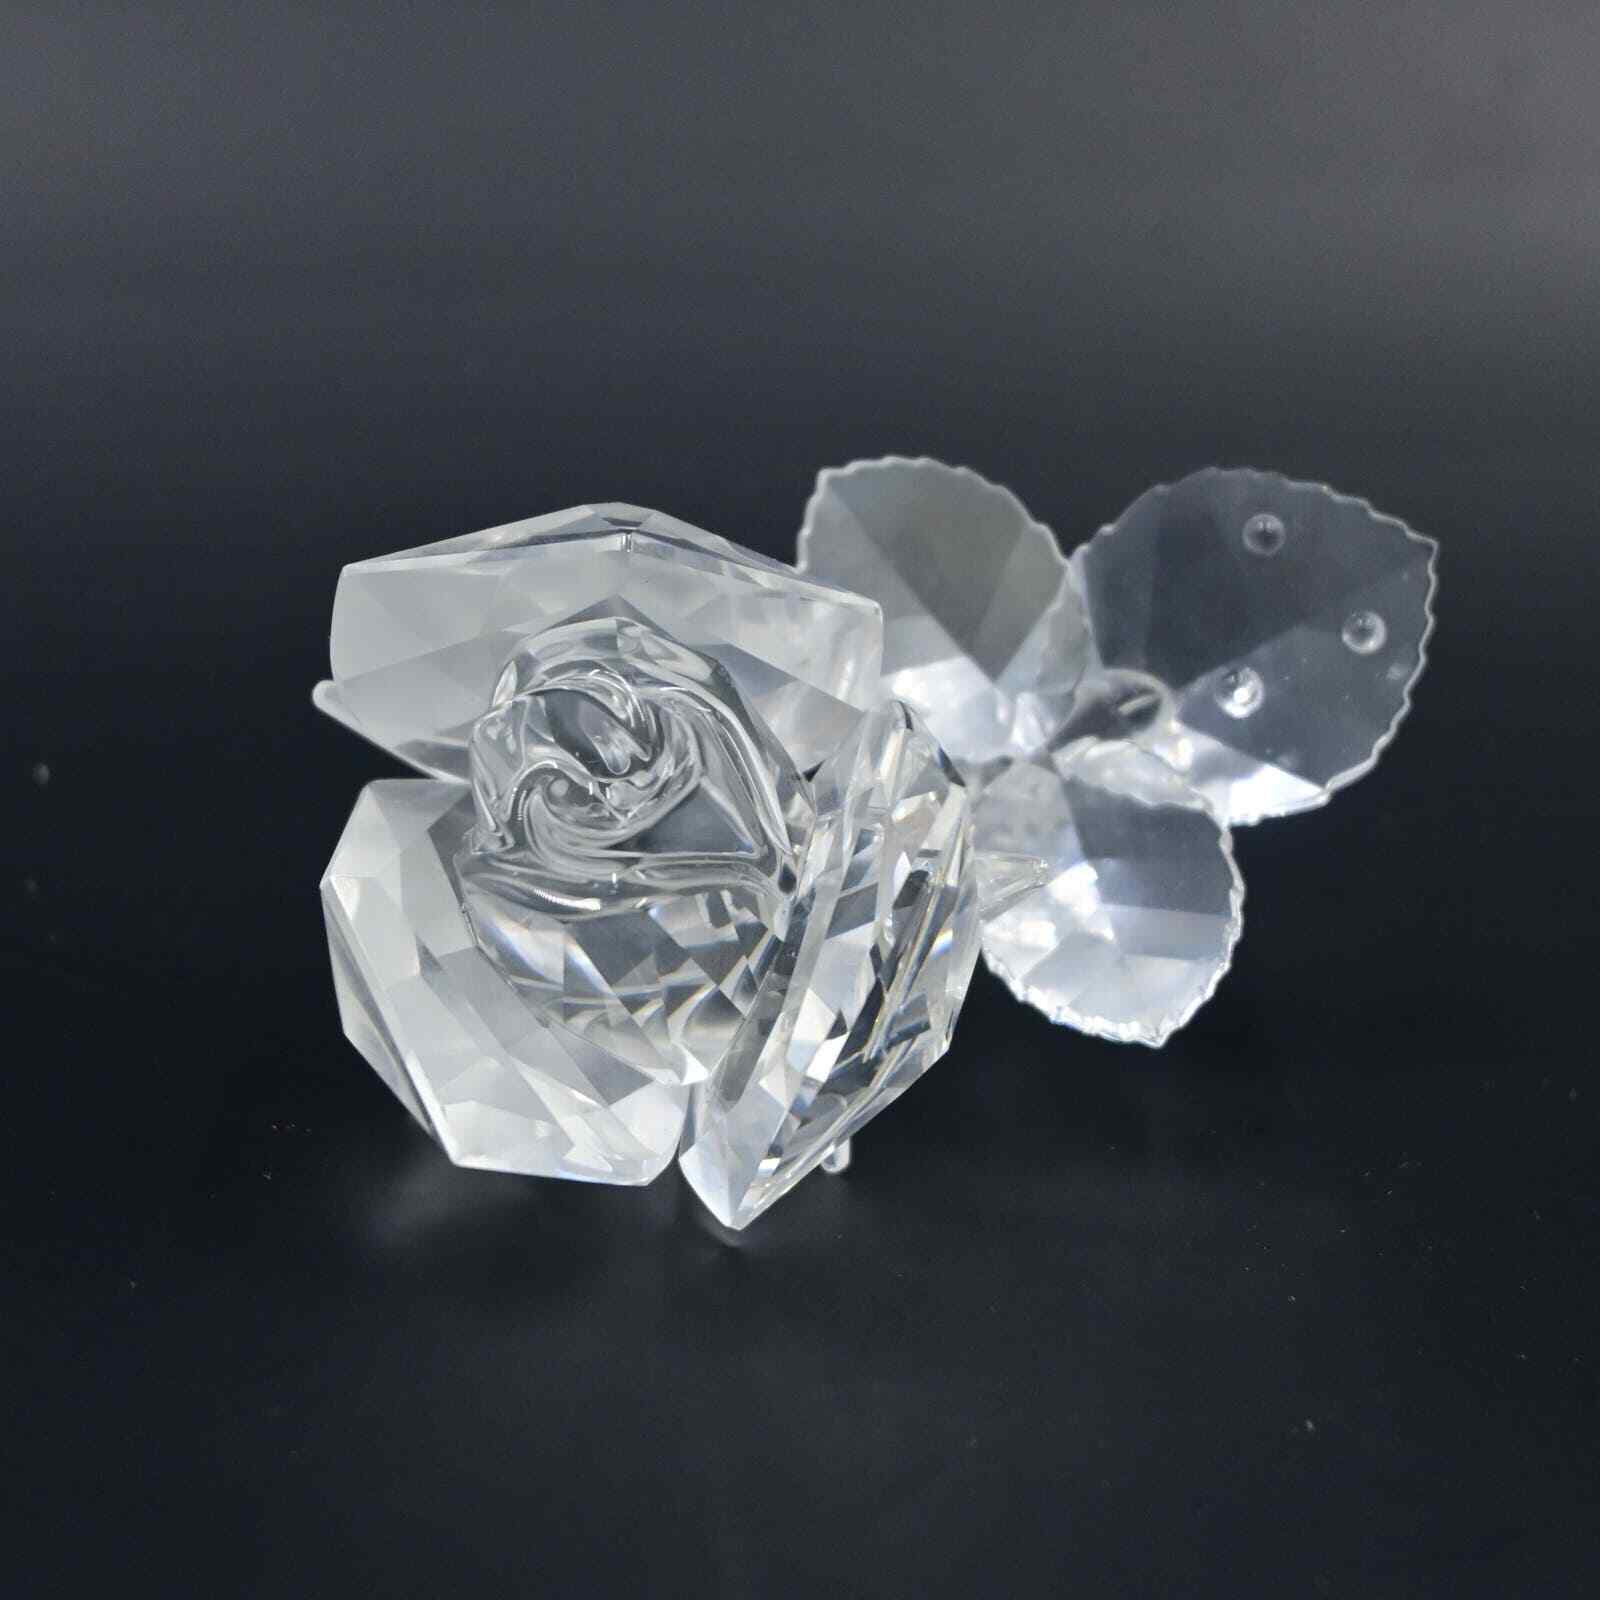 Swarovski Secret Garden Rose With Dew Drops Crystal Glass Figure 174956